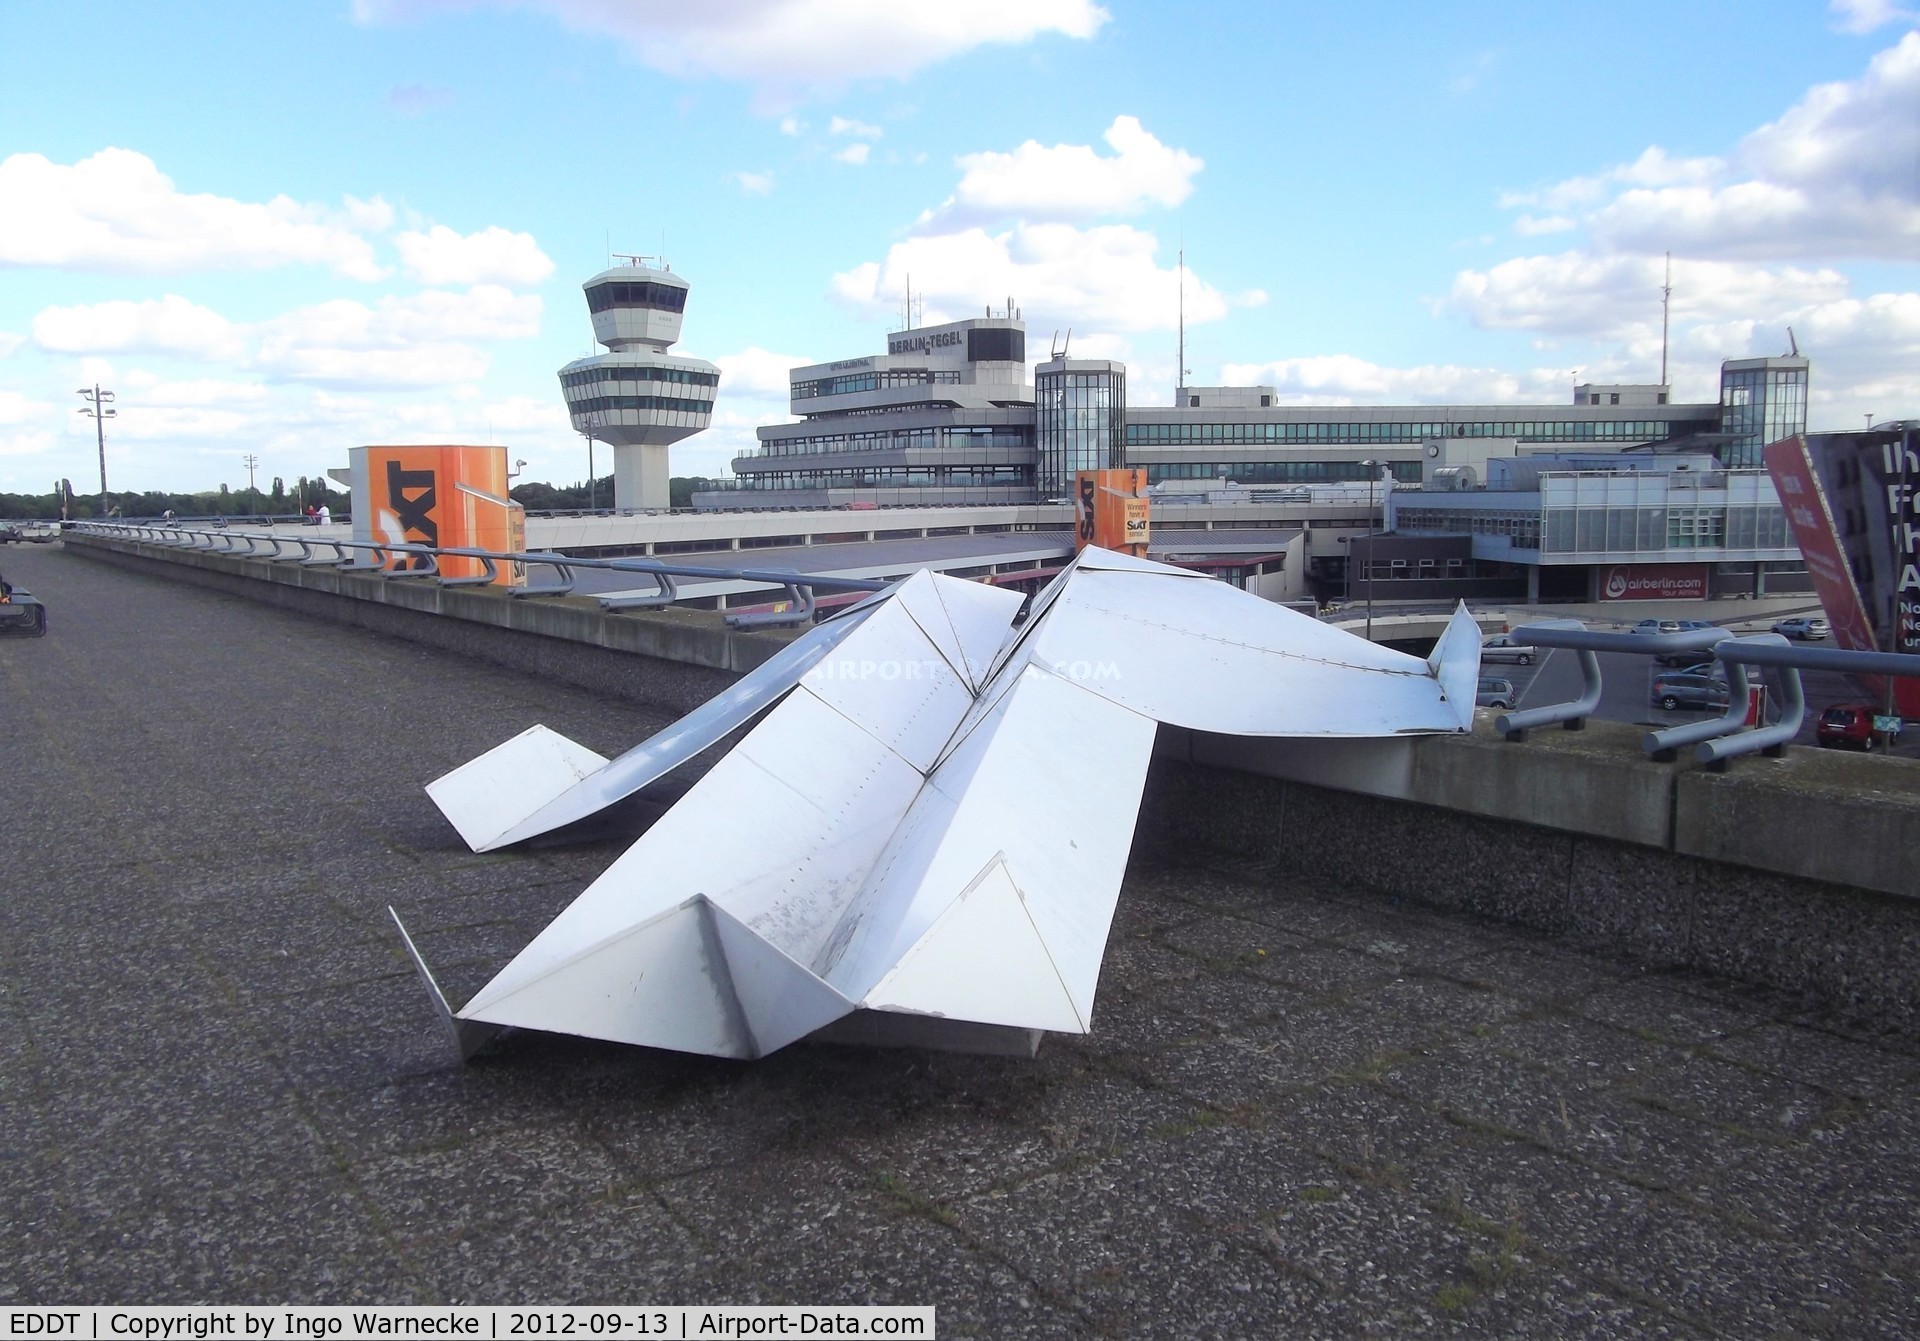 Tegel International Airport (closing in 2011), Berlin Germany (EDDT) - sculpture of a paper plane on the viewing platform at Berlin-Tegel